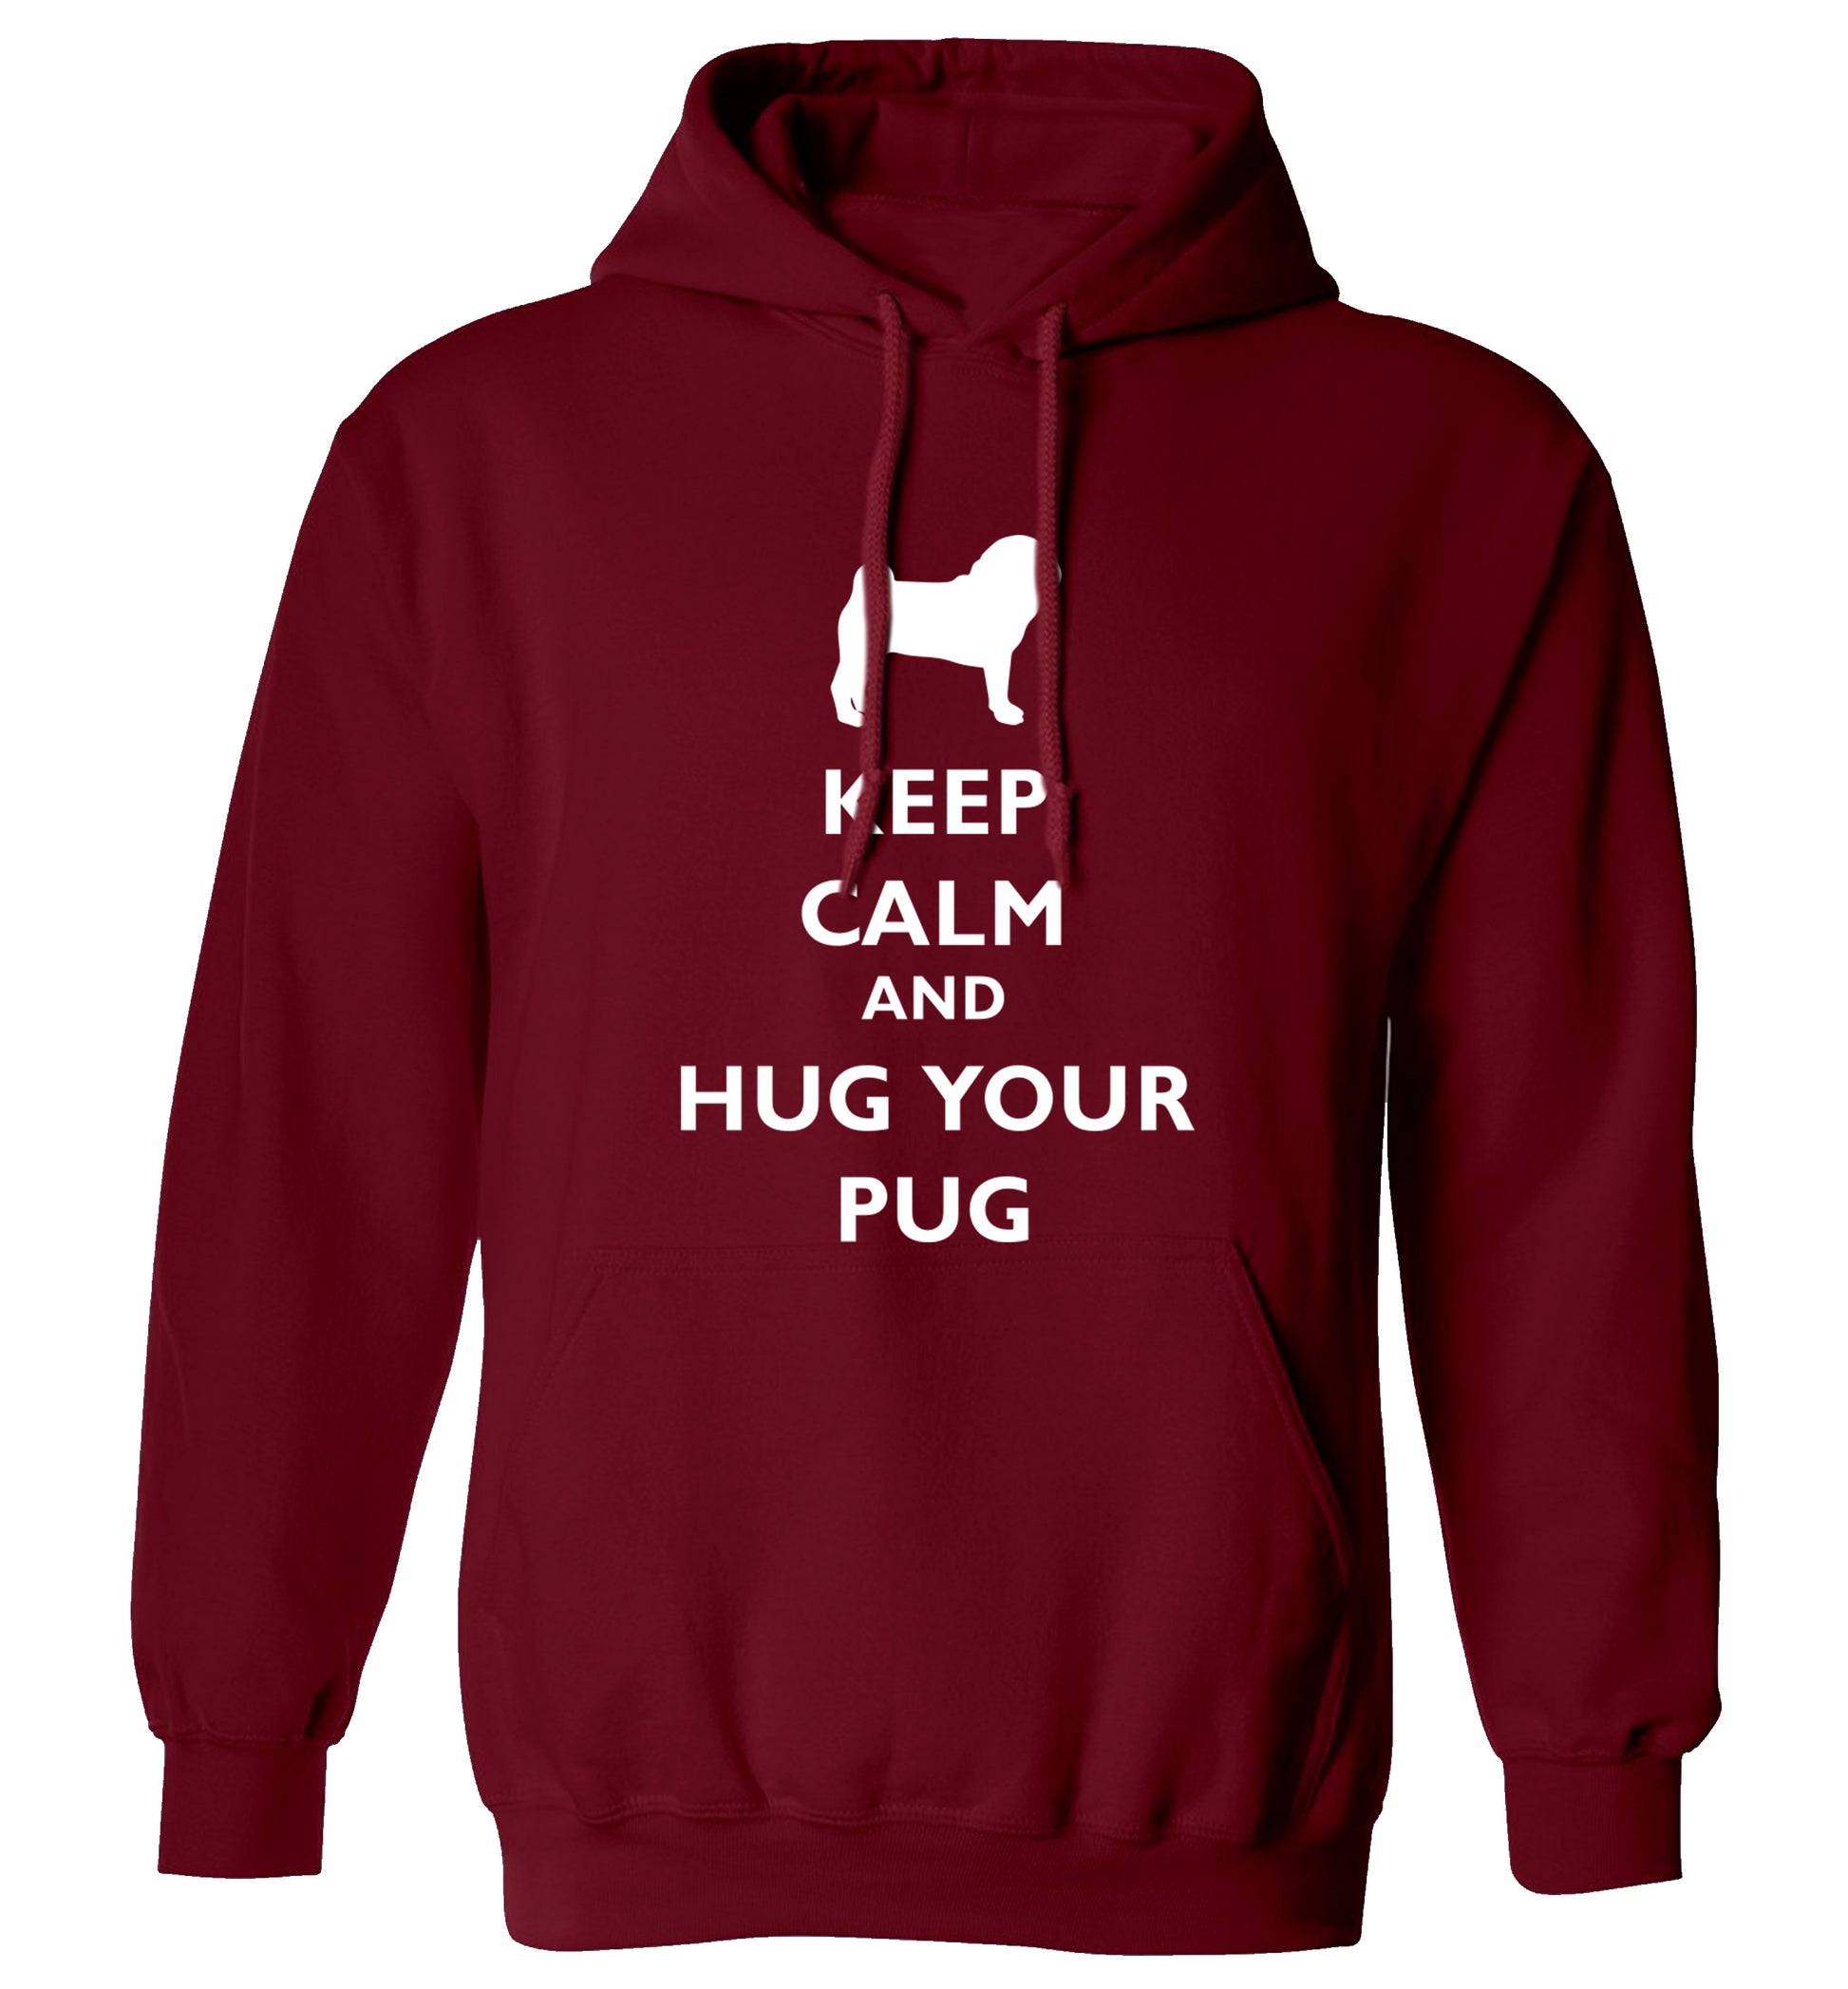 Keep calm and hug your pug adults unisex maroon hoodie 2XL